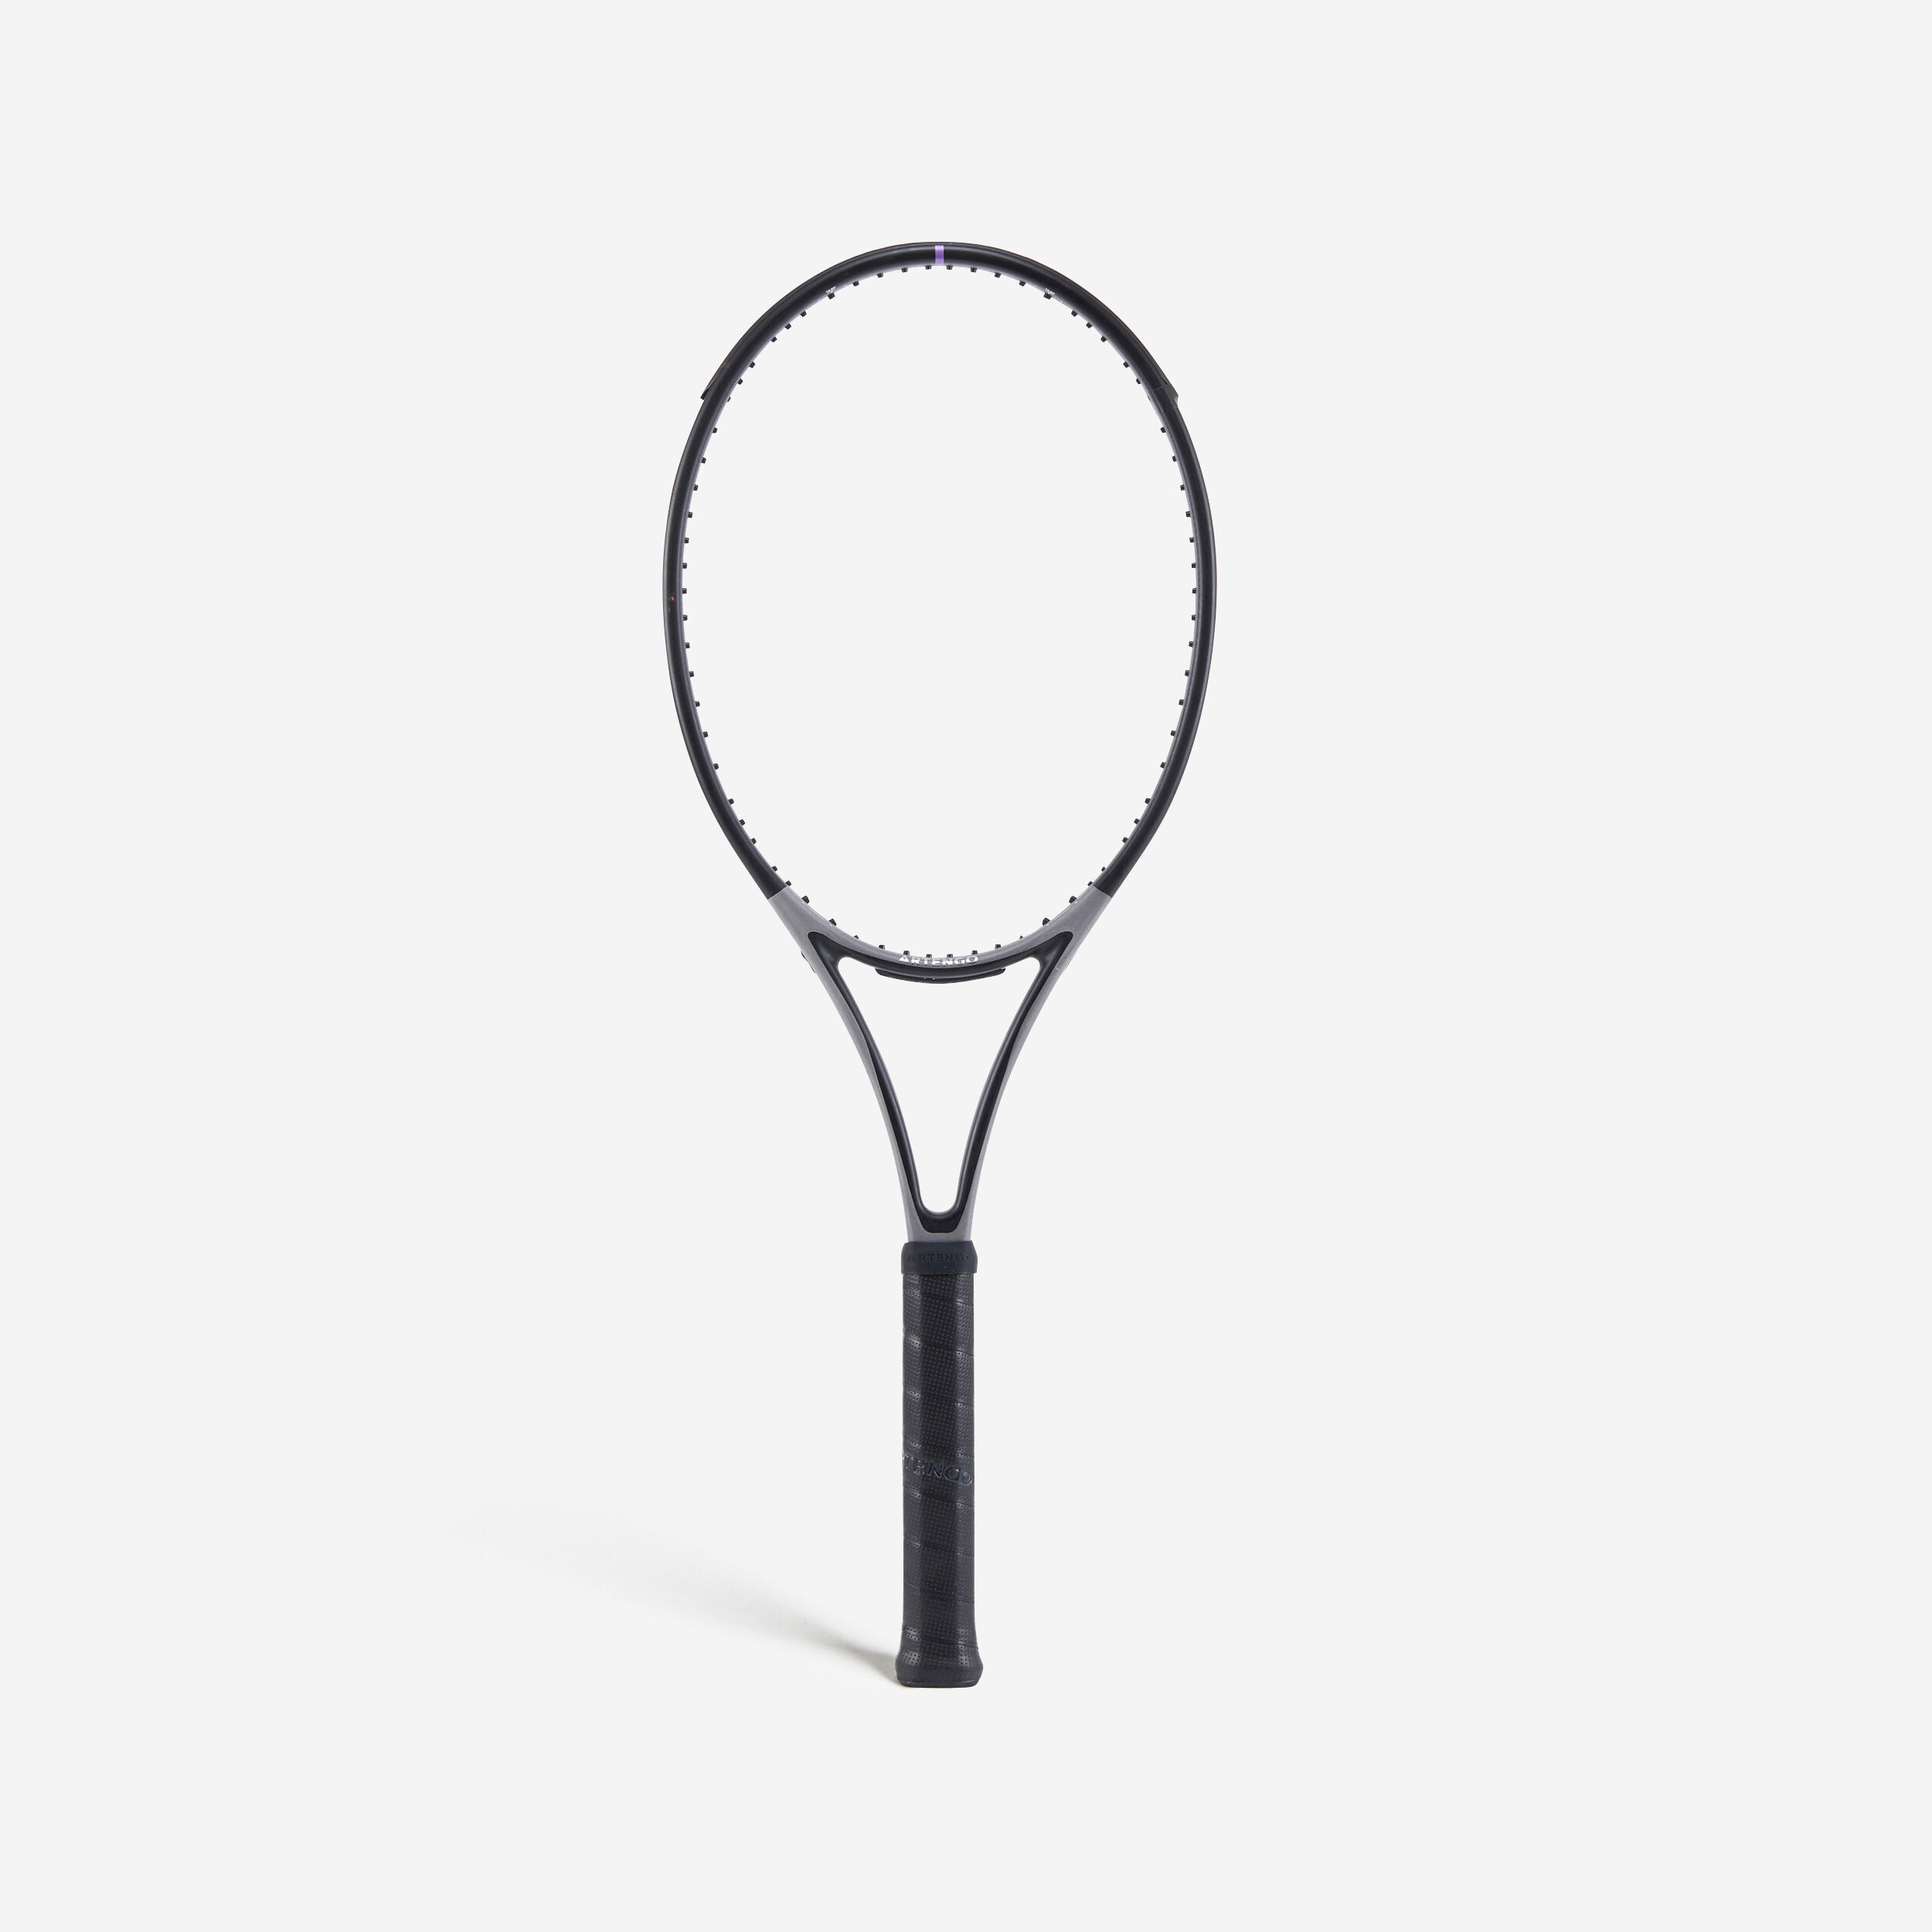 Tennis Racket Unstrung Control Tour 16x19